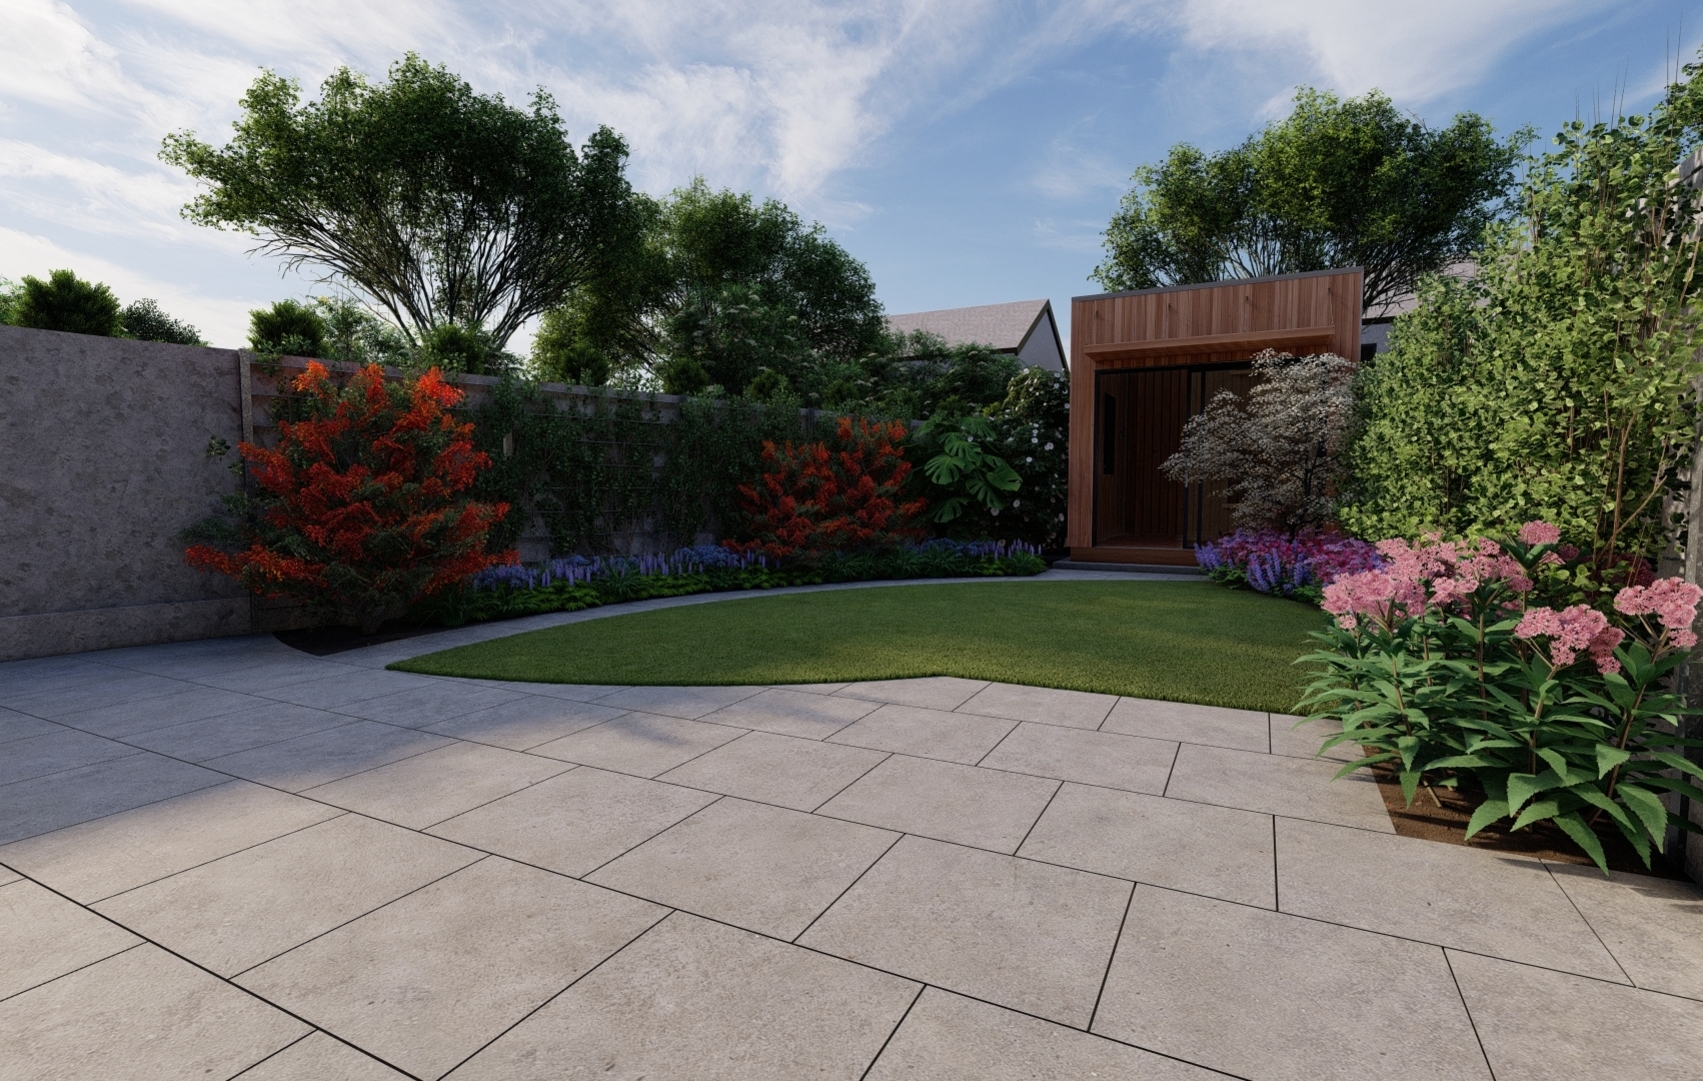 Small Family Garden Design| 3D Design Visuals by Owen Chubb Garden Design & Landscaping. Tel 087-2306 128